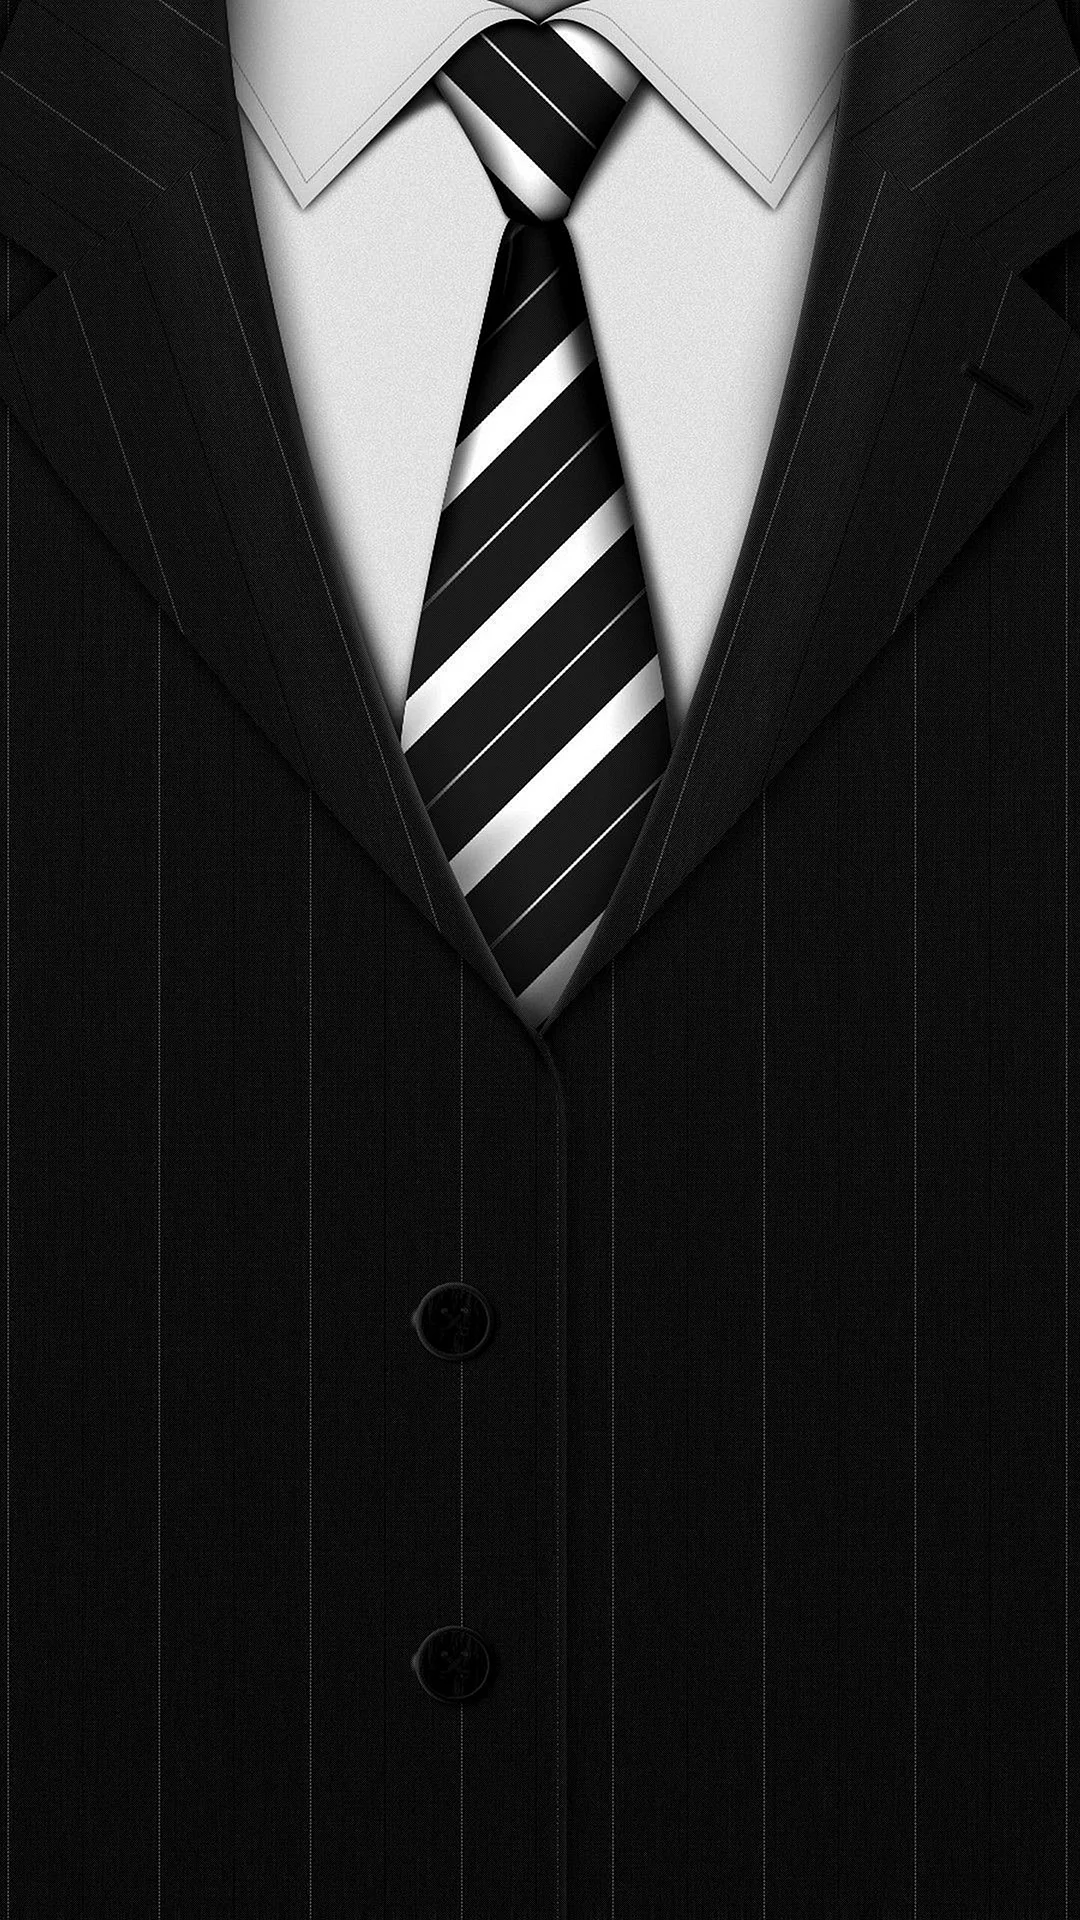 Пиджак рубашка галстук